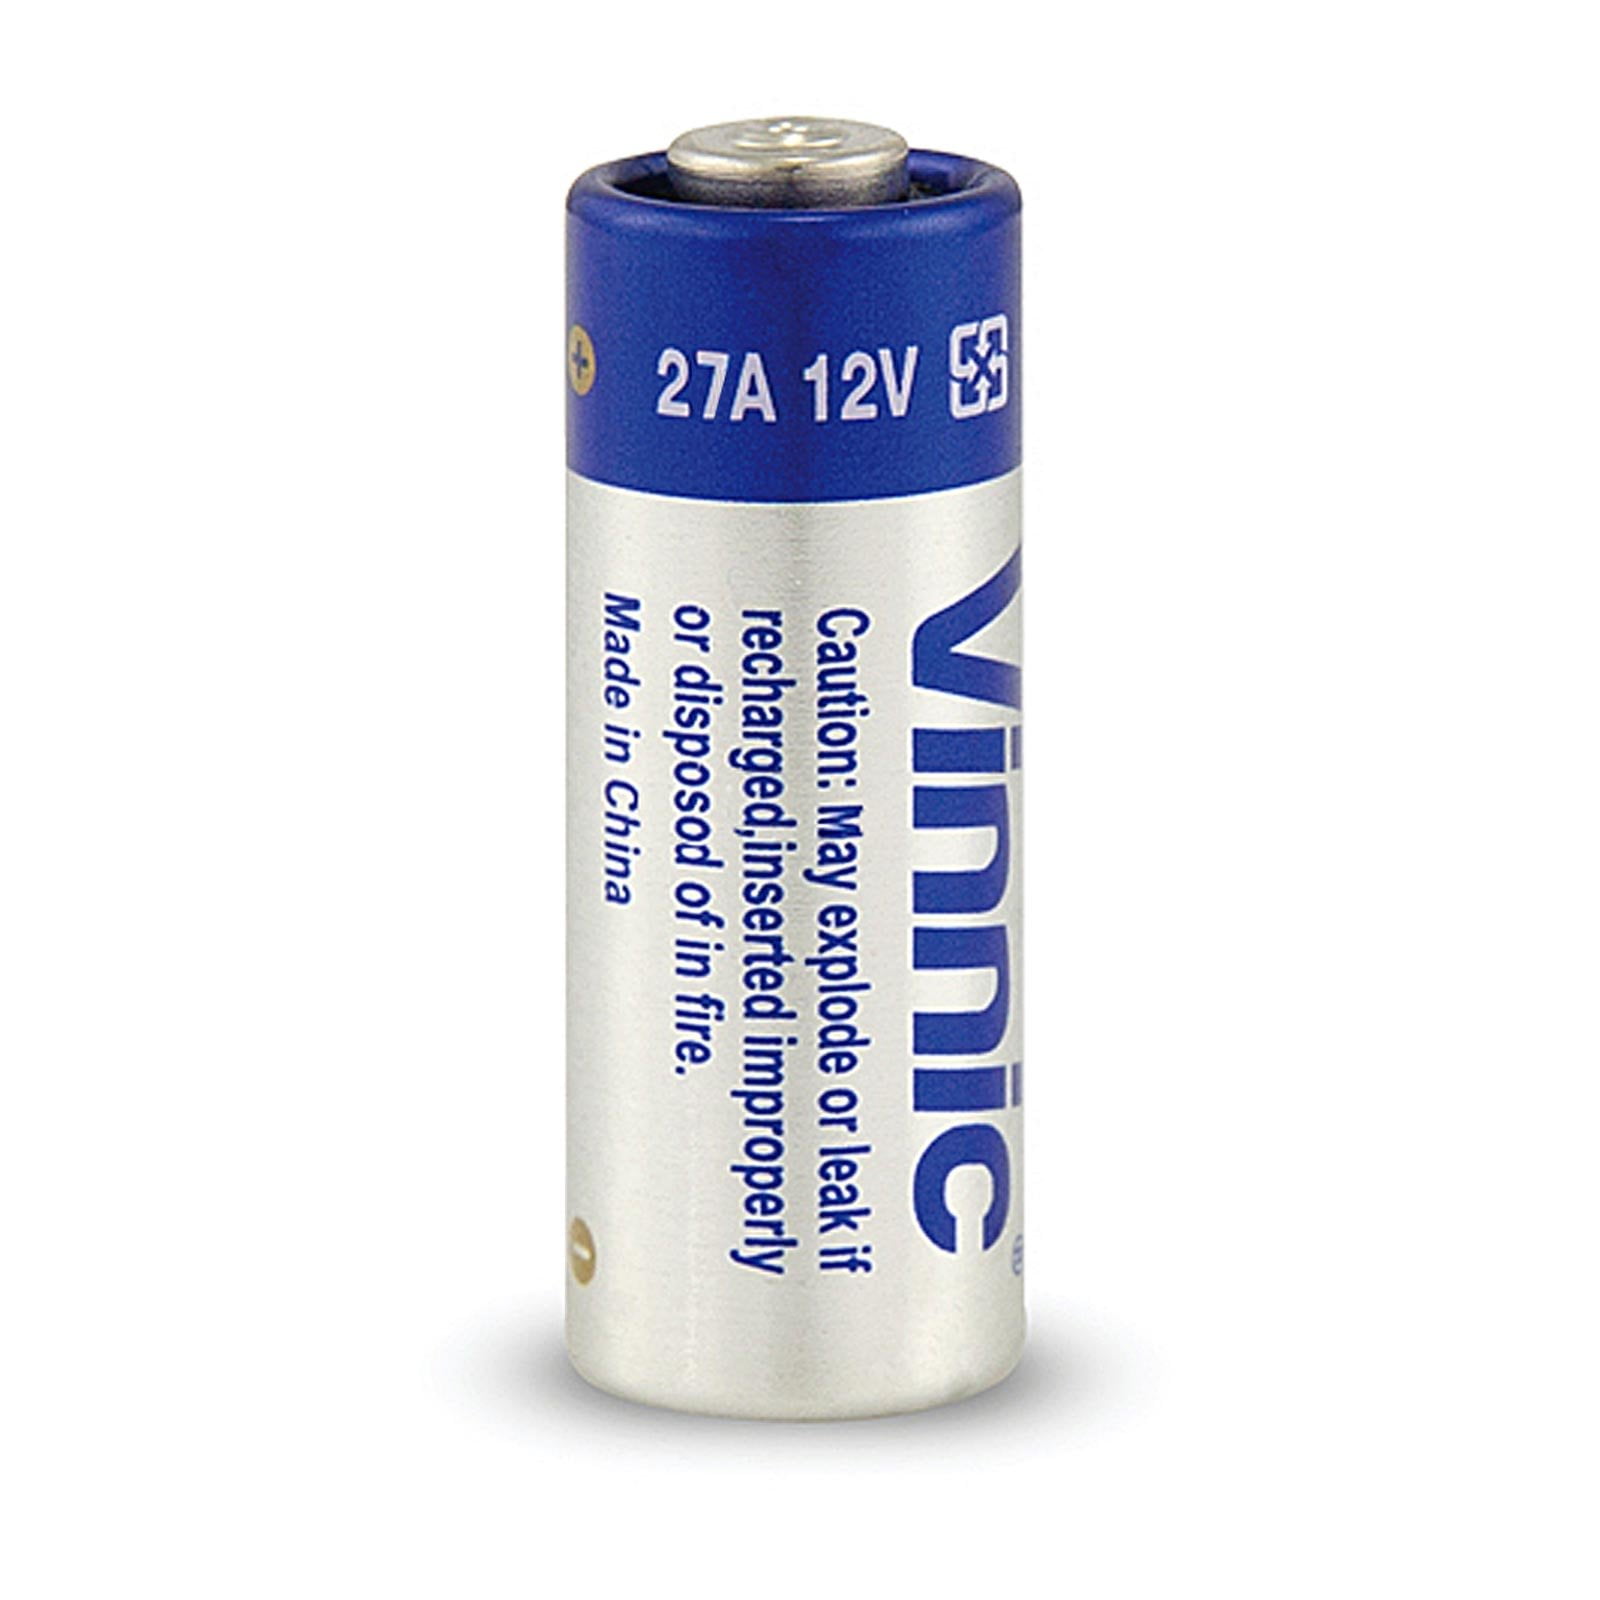 Vinnic A27 Alkaline 12V Battery G27A, MN27, GP27A, AG27, L828 by Vinnic 